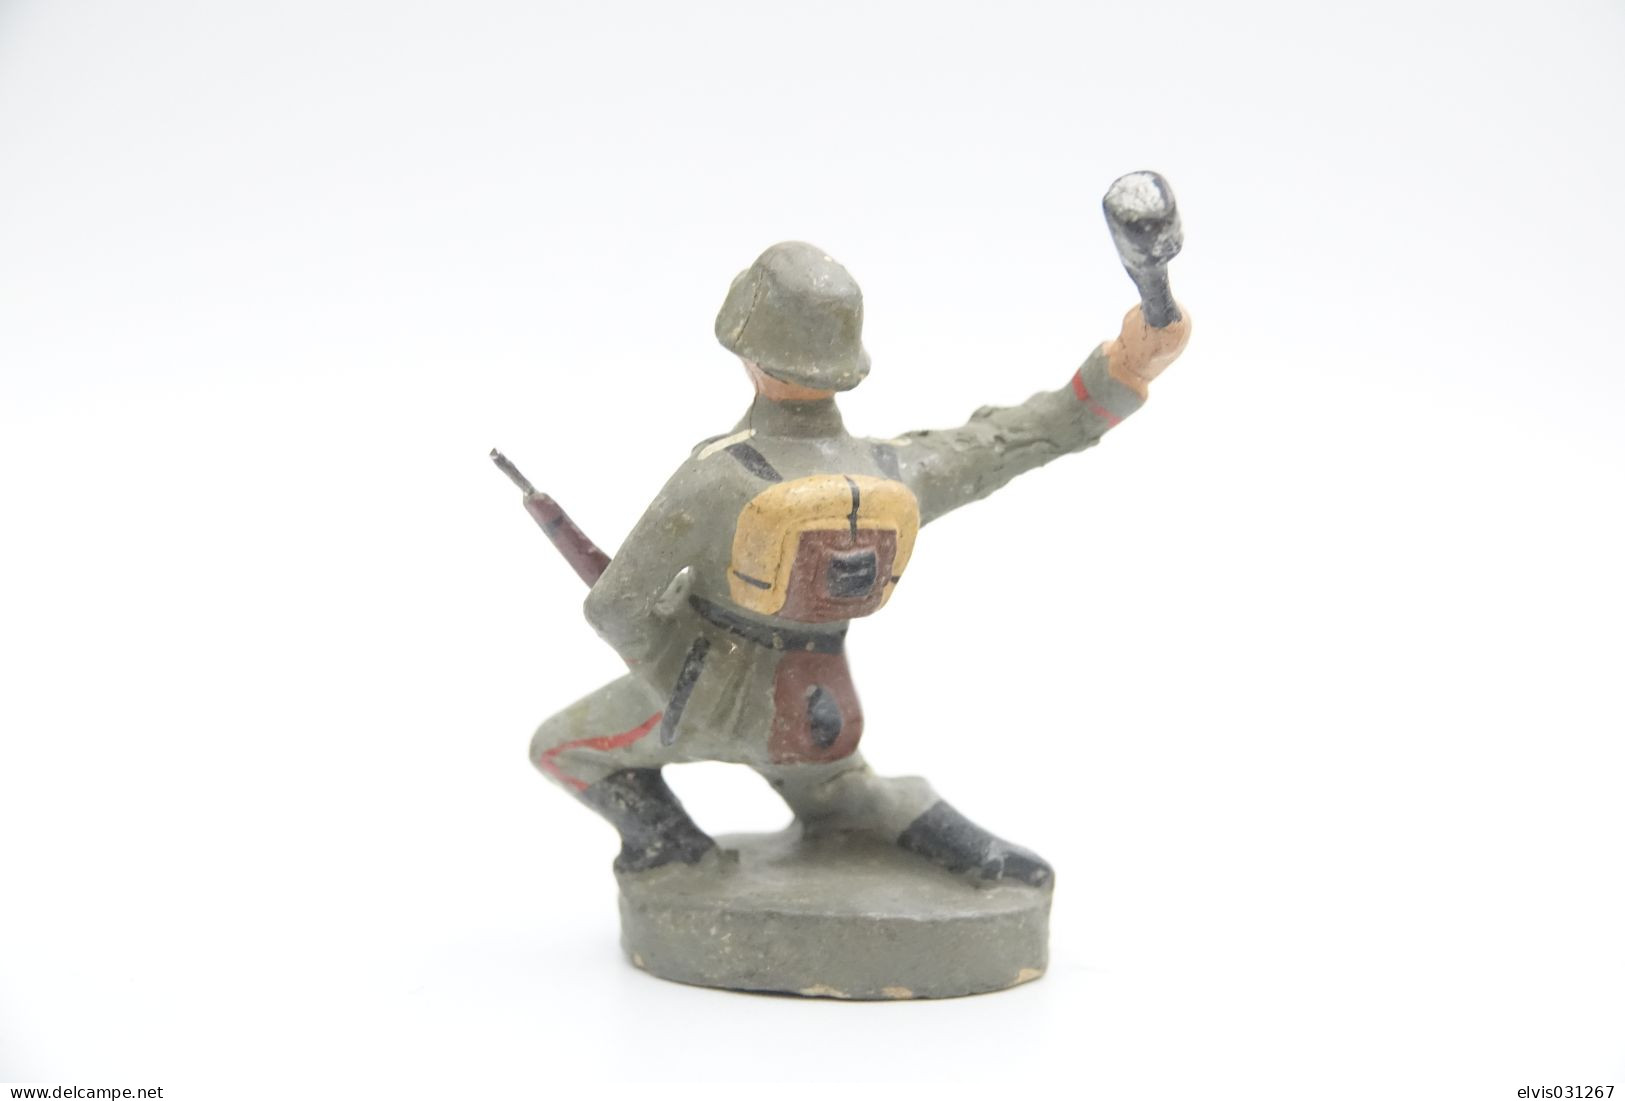 Lineol ? Germany, German With Grenade, Vintage Toy Soldier, Prewar - 1930's, Elastolin, Lineol Hauser, Durolin - Small Figures